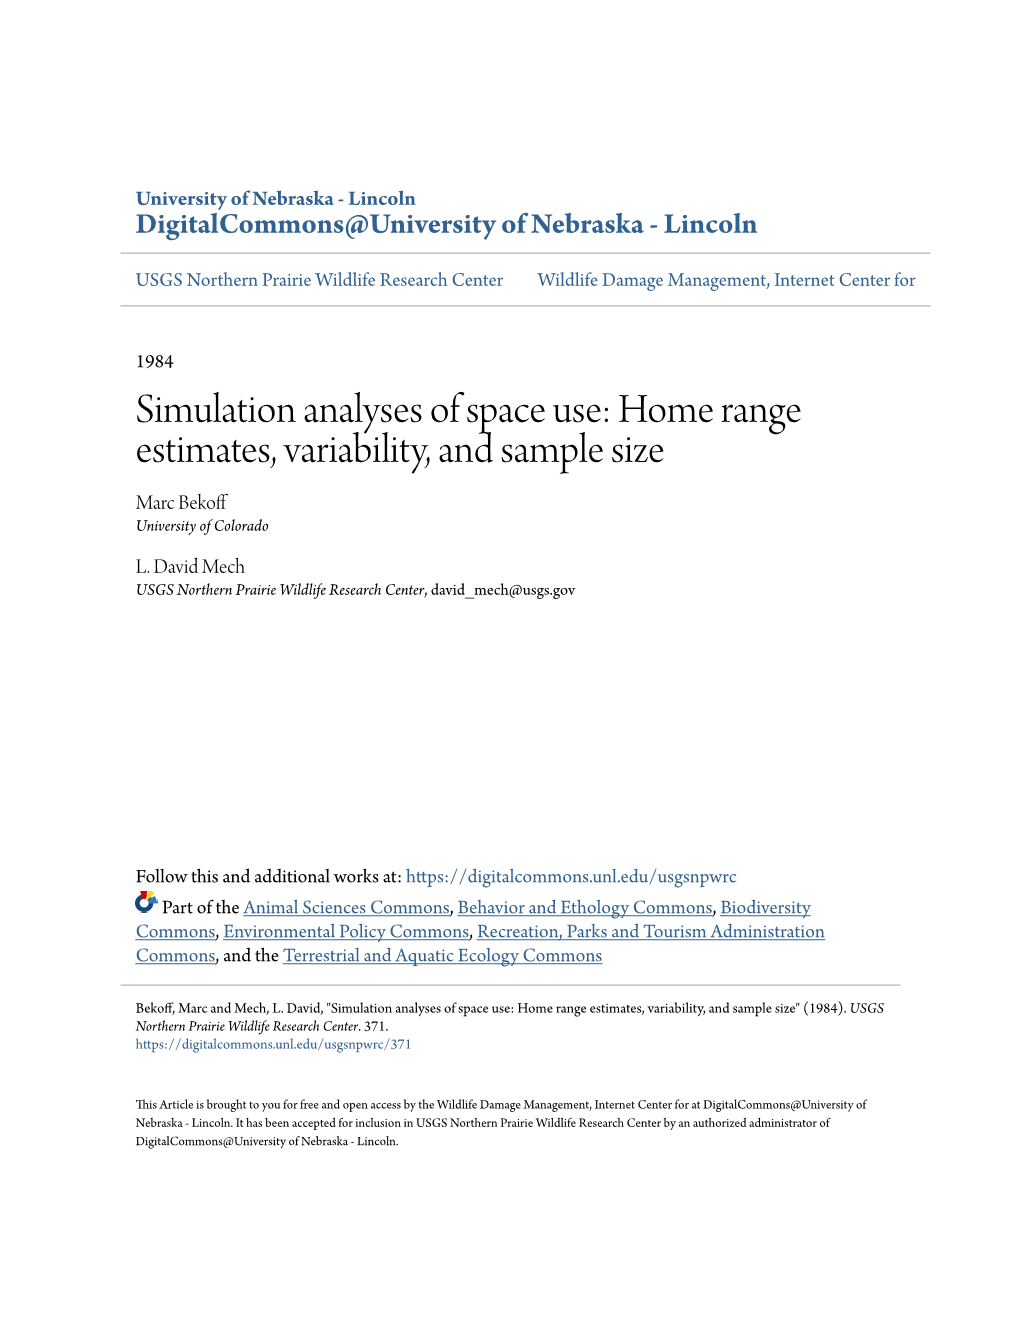 Home Range Estimates, Variability, and Sample Size Marc Bekoff University of Colorado